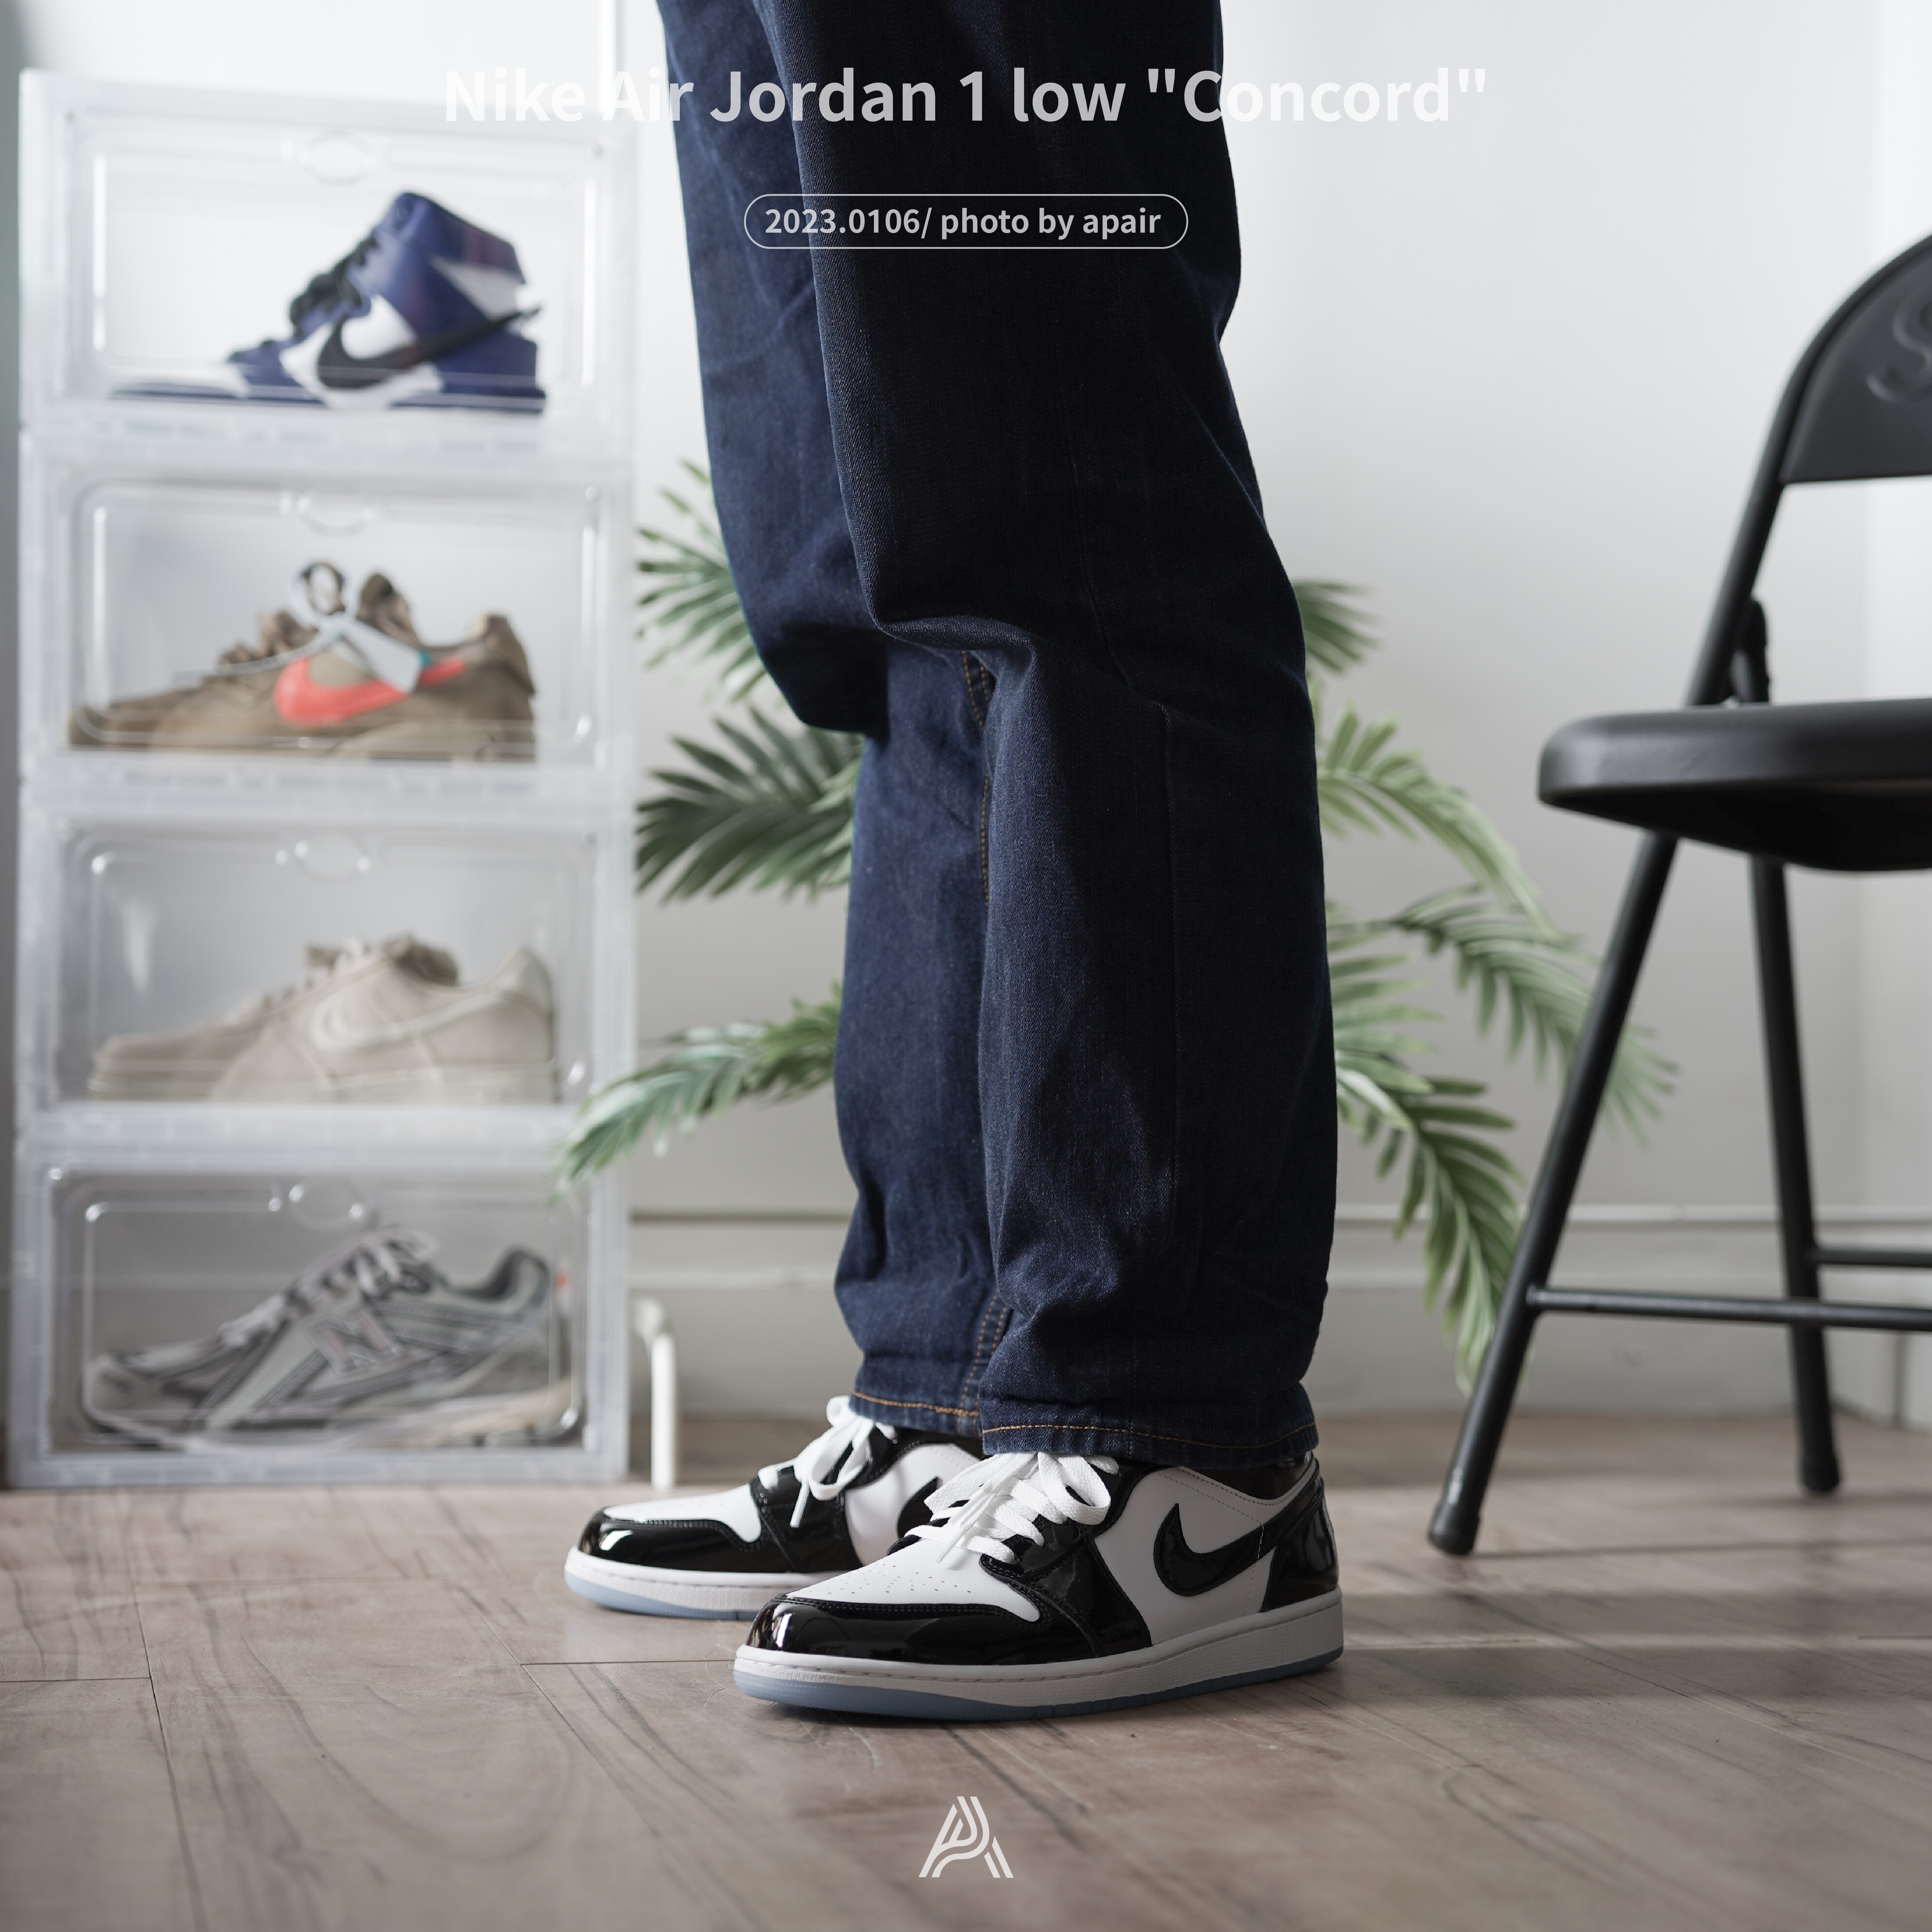 APAIR】現貨Nike Air Jordan 1 low "Concord" 黑白漆皮熊貓冰晶底D